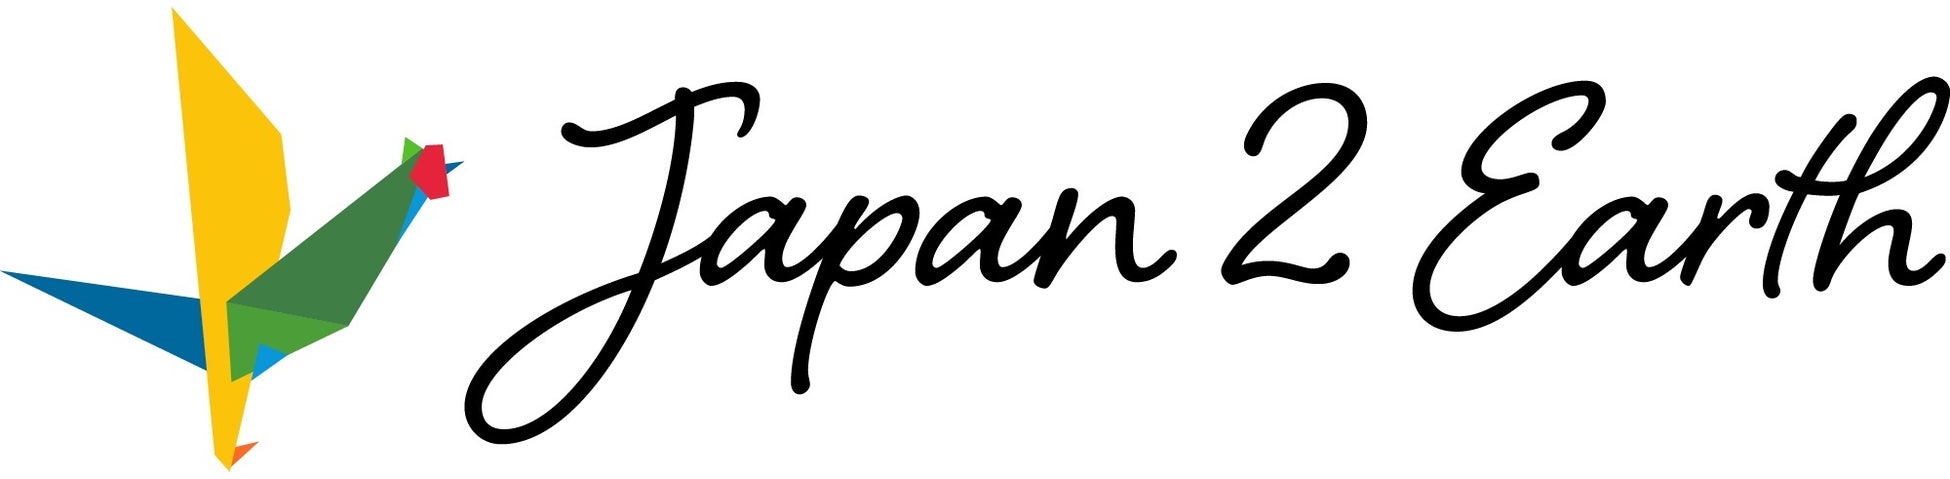 ＳＤＧｓ 日本の挑戦を世界に紹介　JAPAN Forwardが新サイト「Japan ２ Earth」開設のサブ画像1